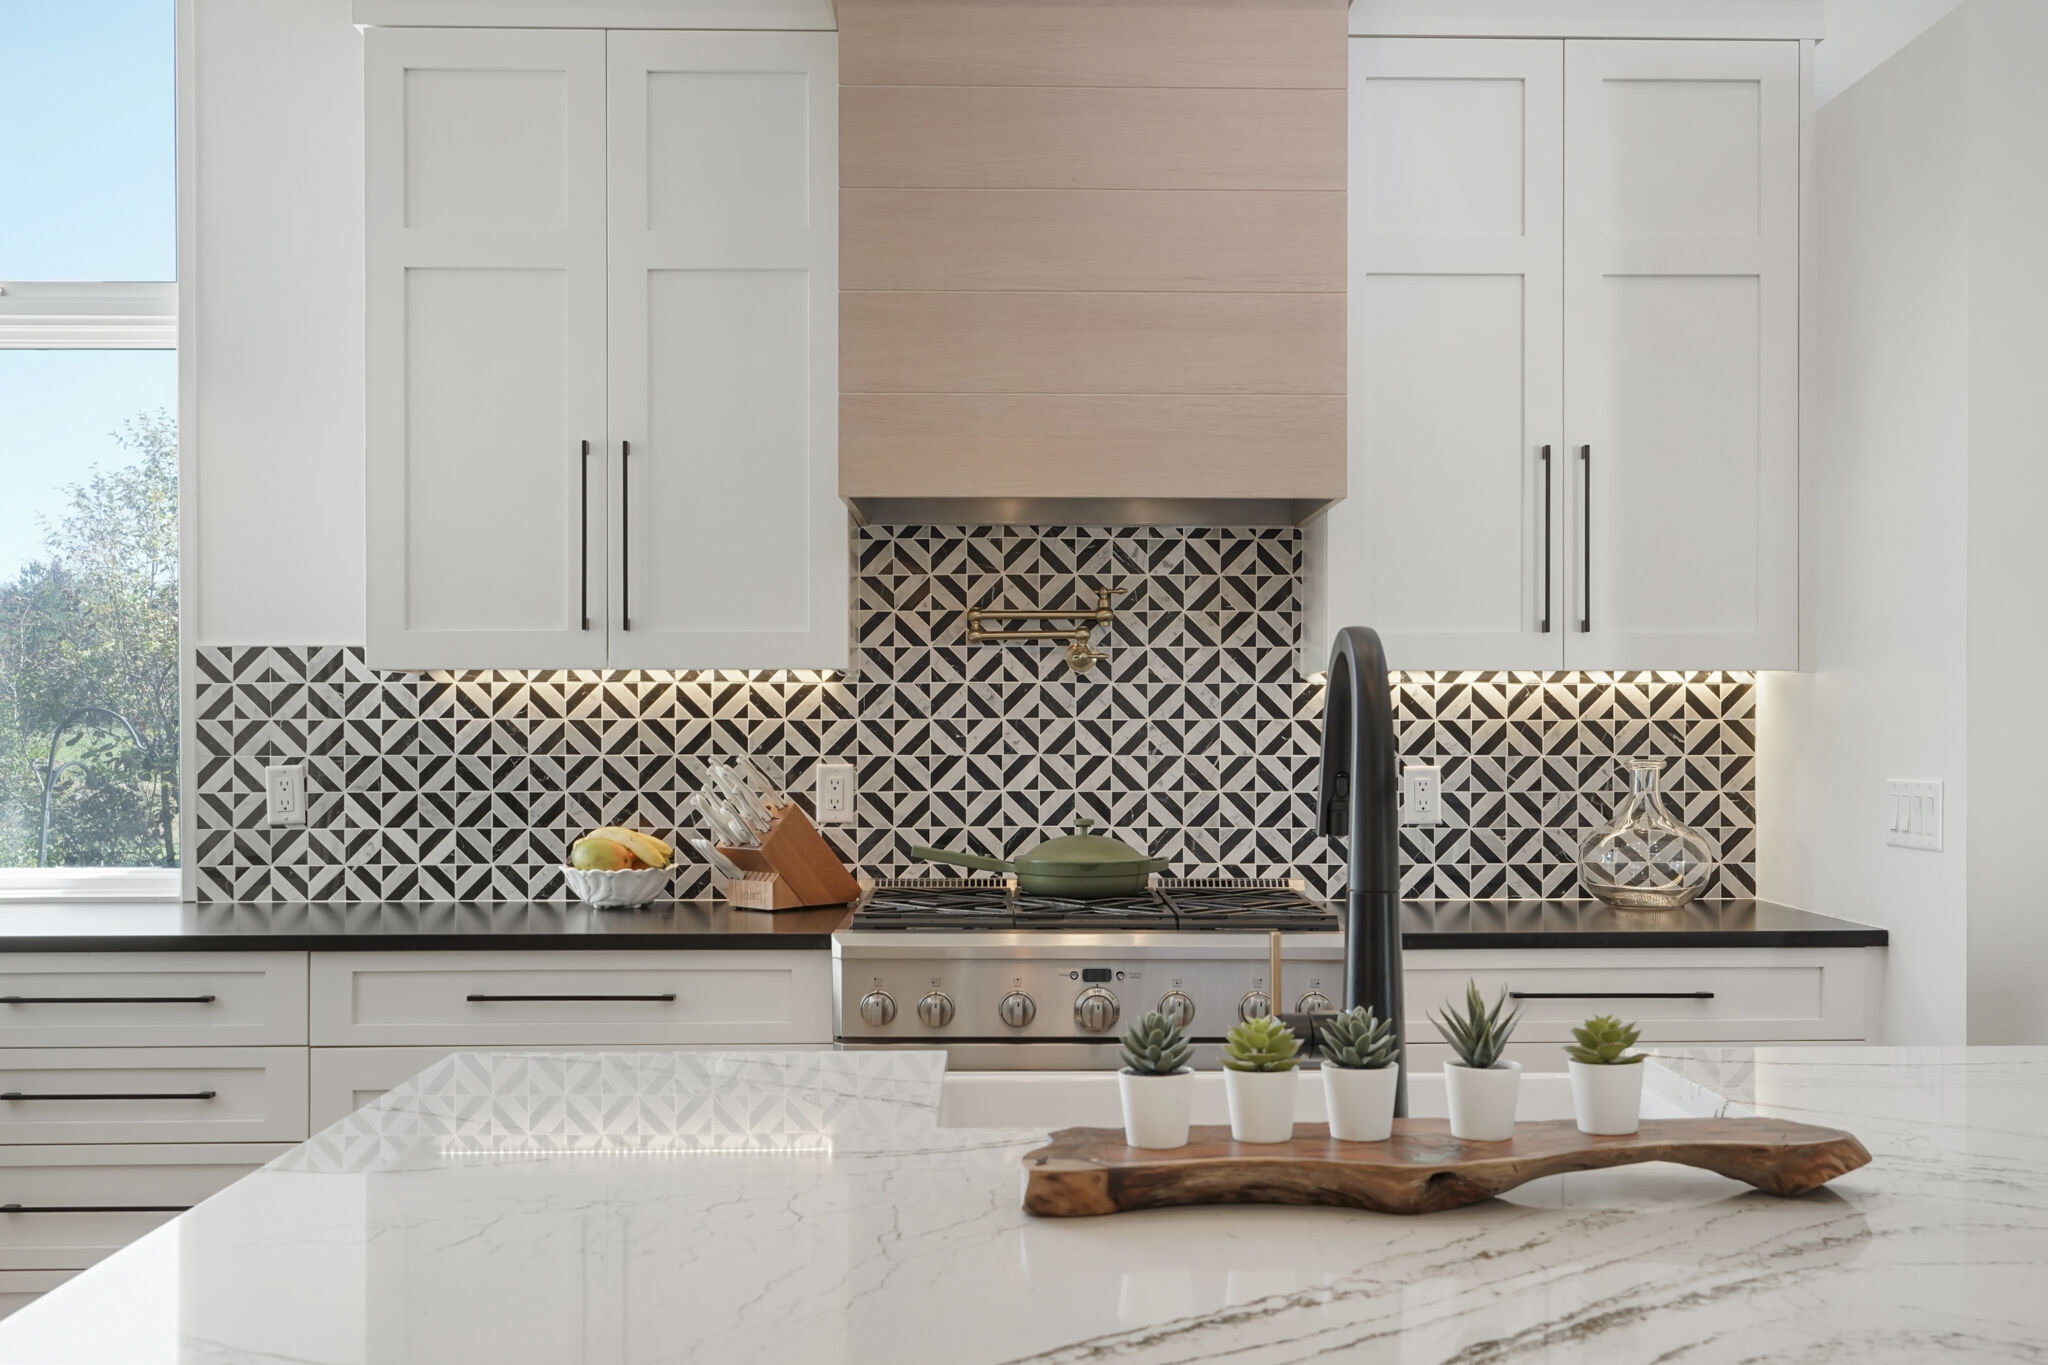 Kitchen remodel with white Shaker cabinets and tile backsplash